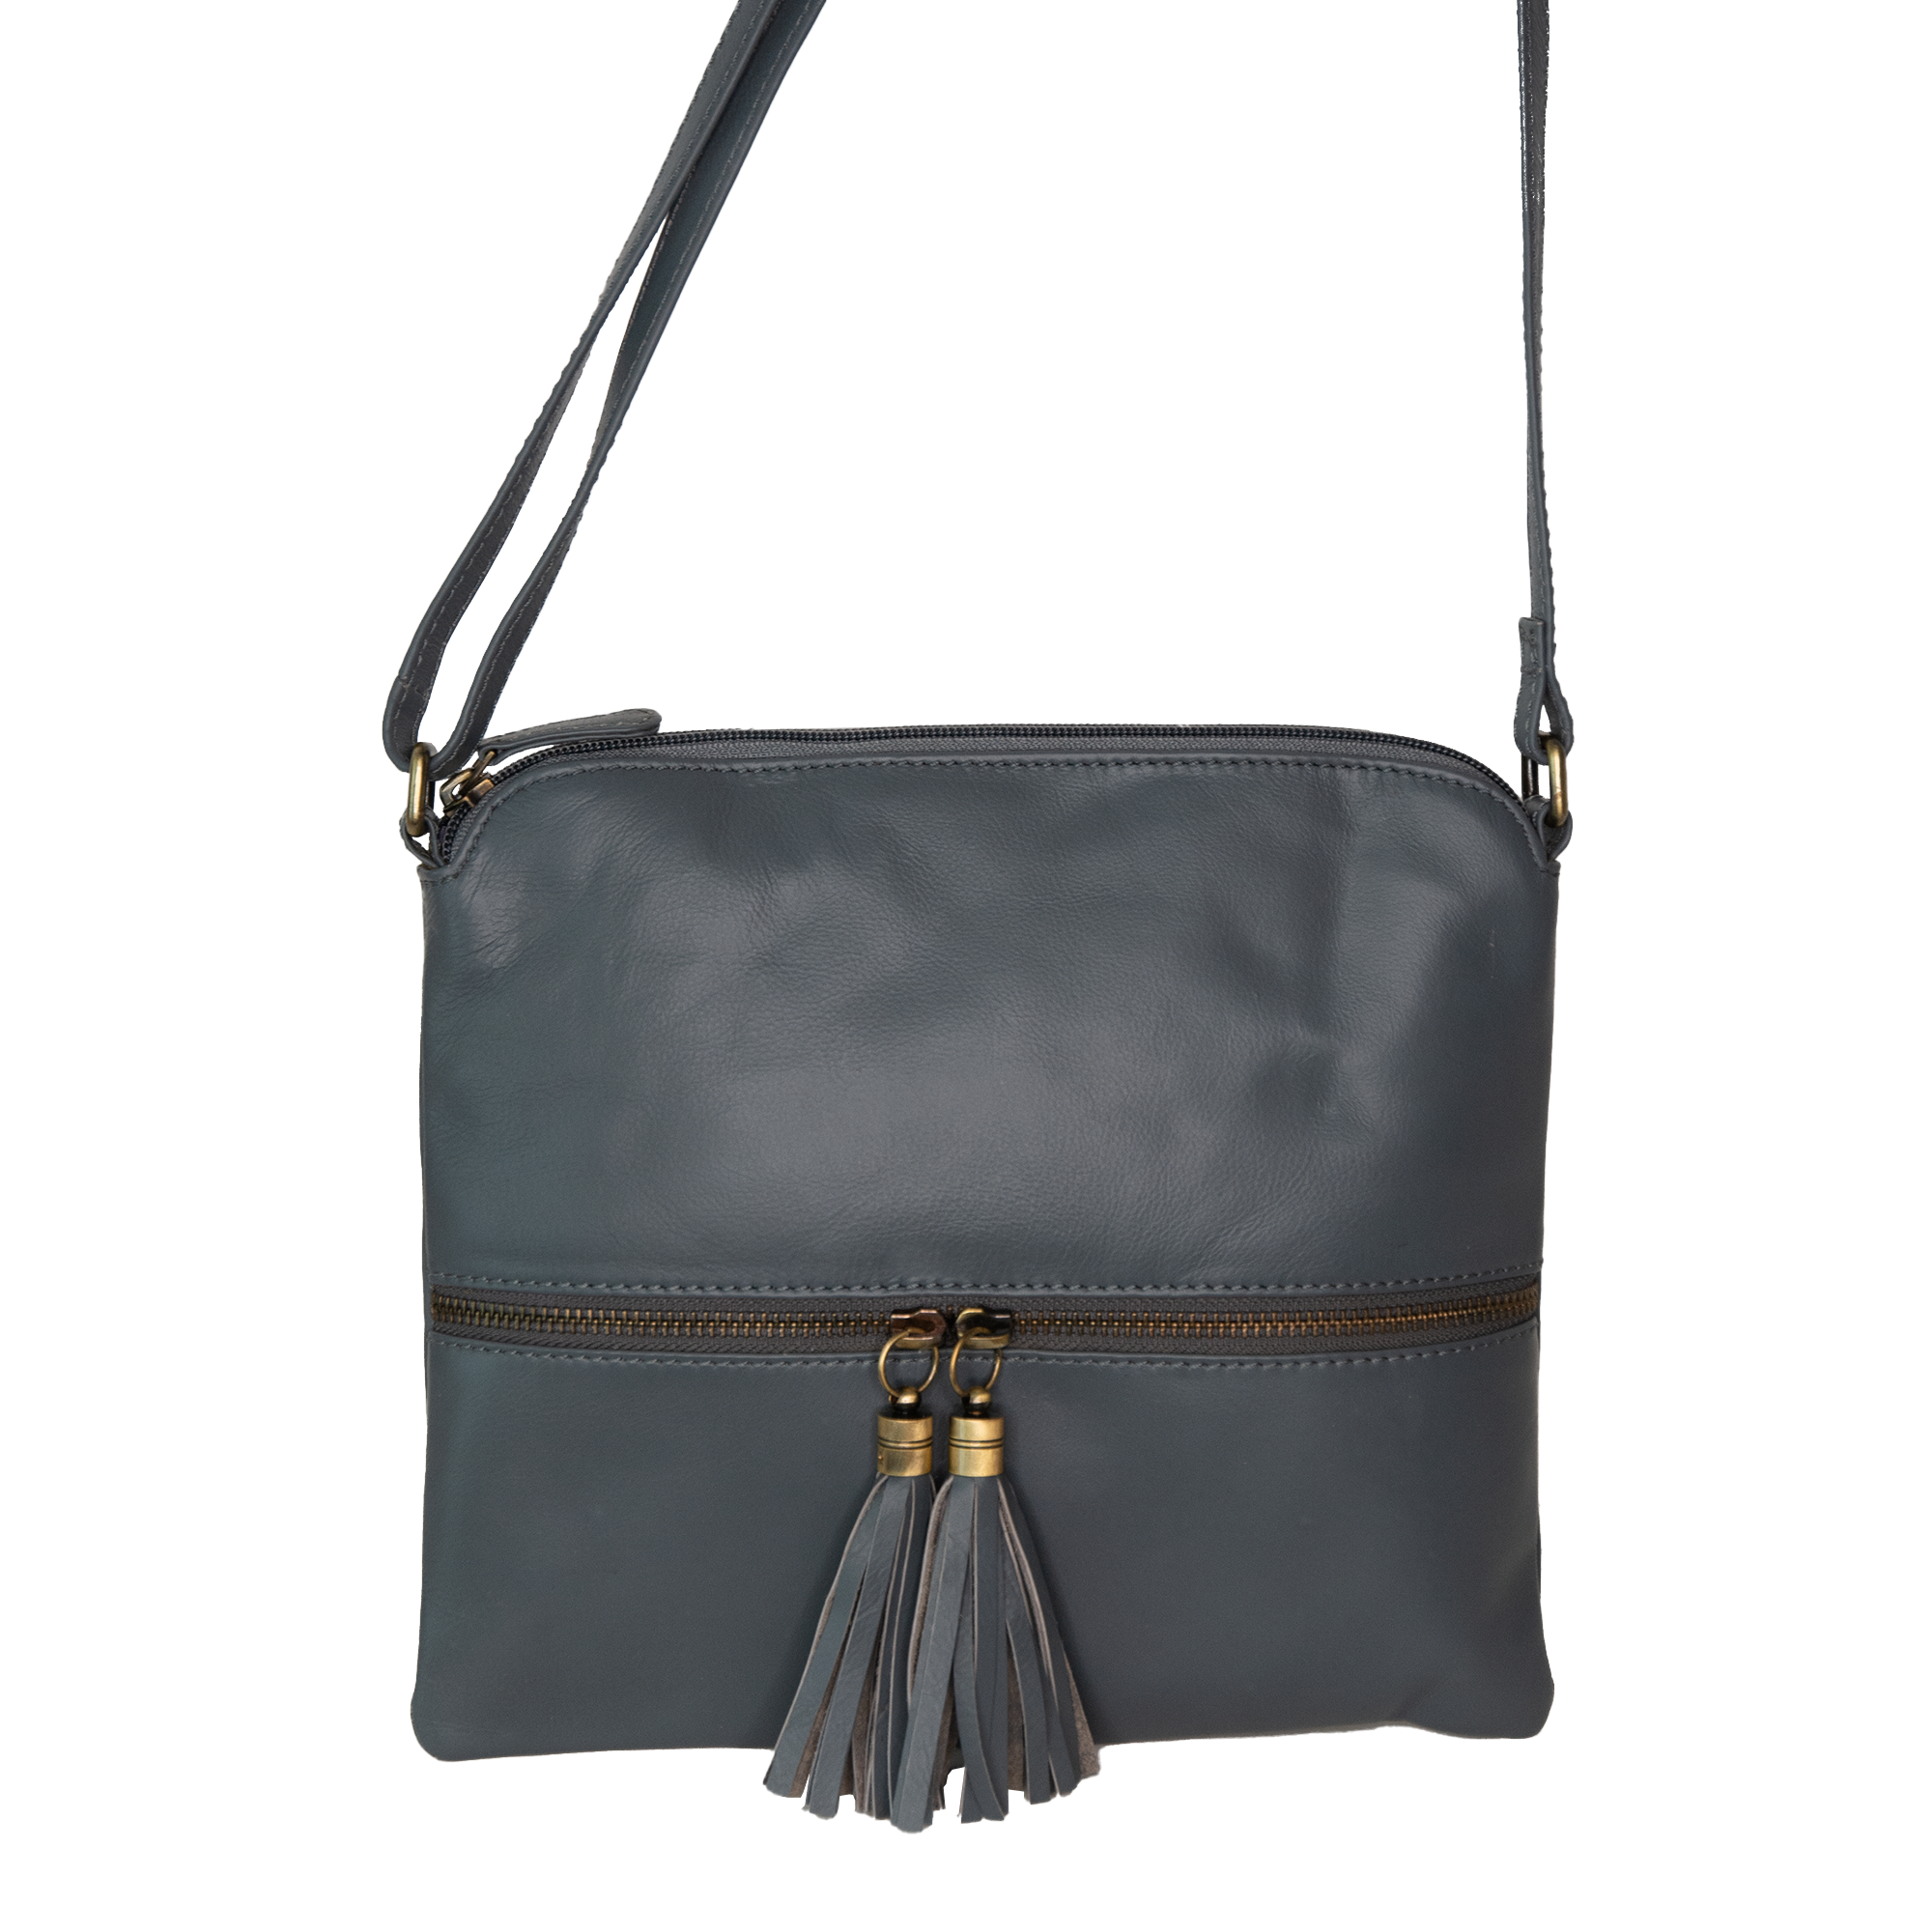 Lottie - (Vellutio Nappa Leather) Cross Body Buckle Bag by Bolla